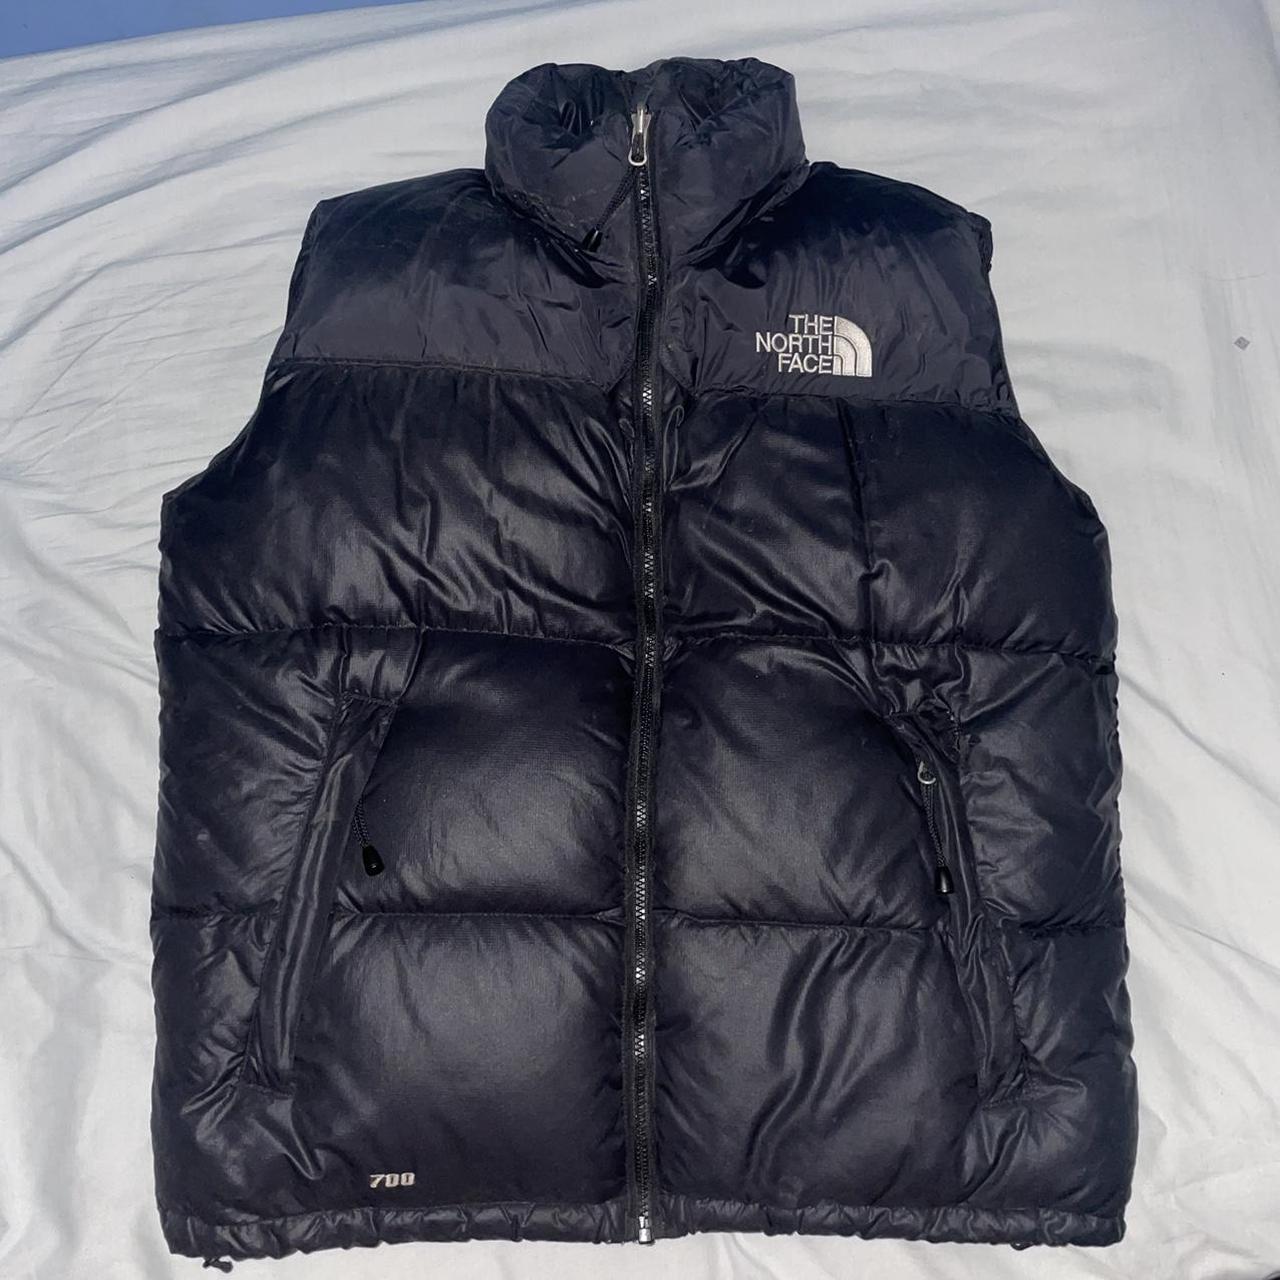 🟢 ITEM- NorthFace Gilet puffer jacket 700 down... - Depop